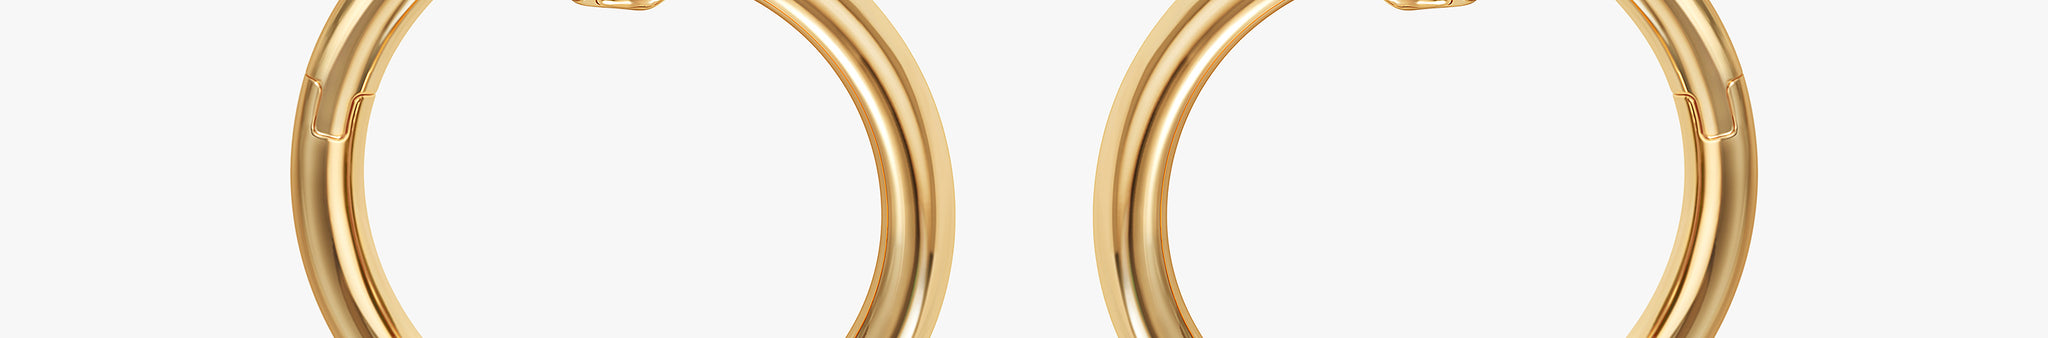 J'EVAR 14KT Yellow Gold Enso ALTR Lab Grown Diamond Earrings Front View